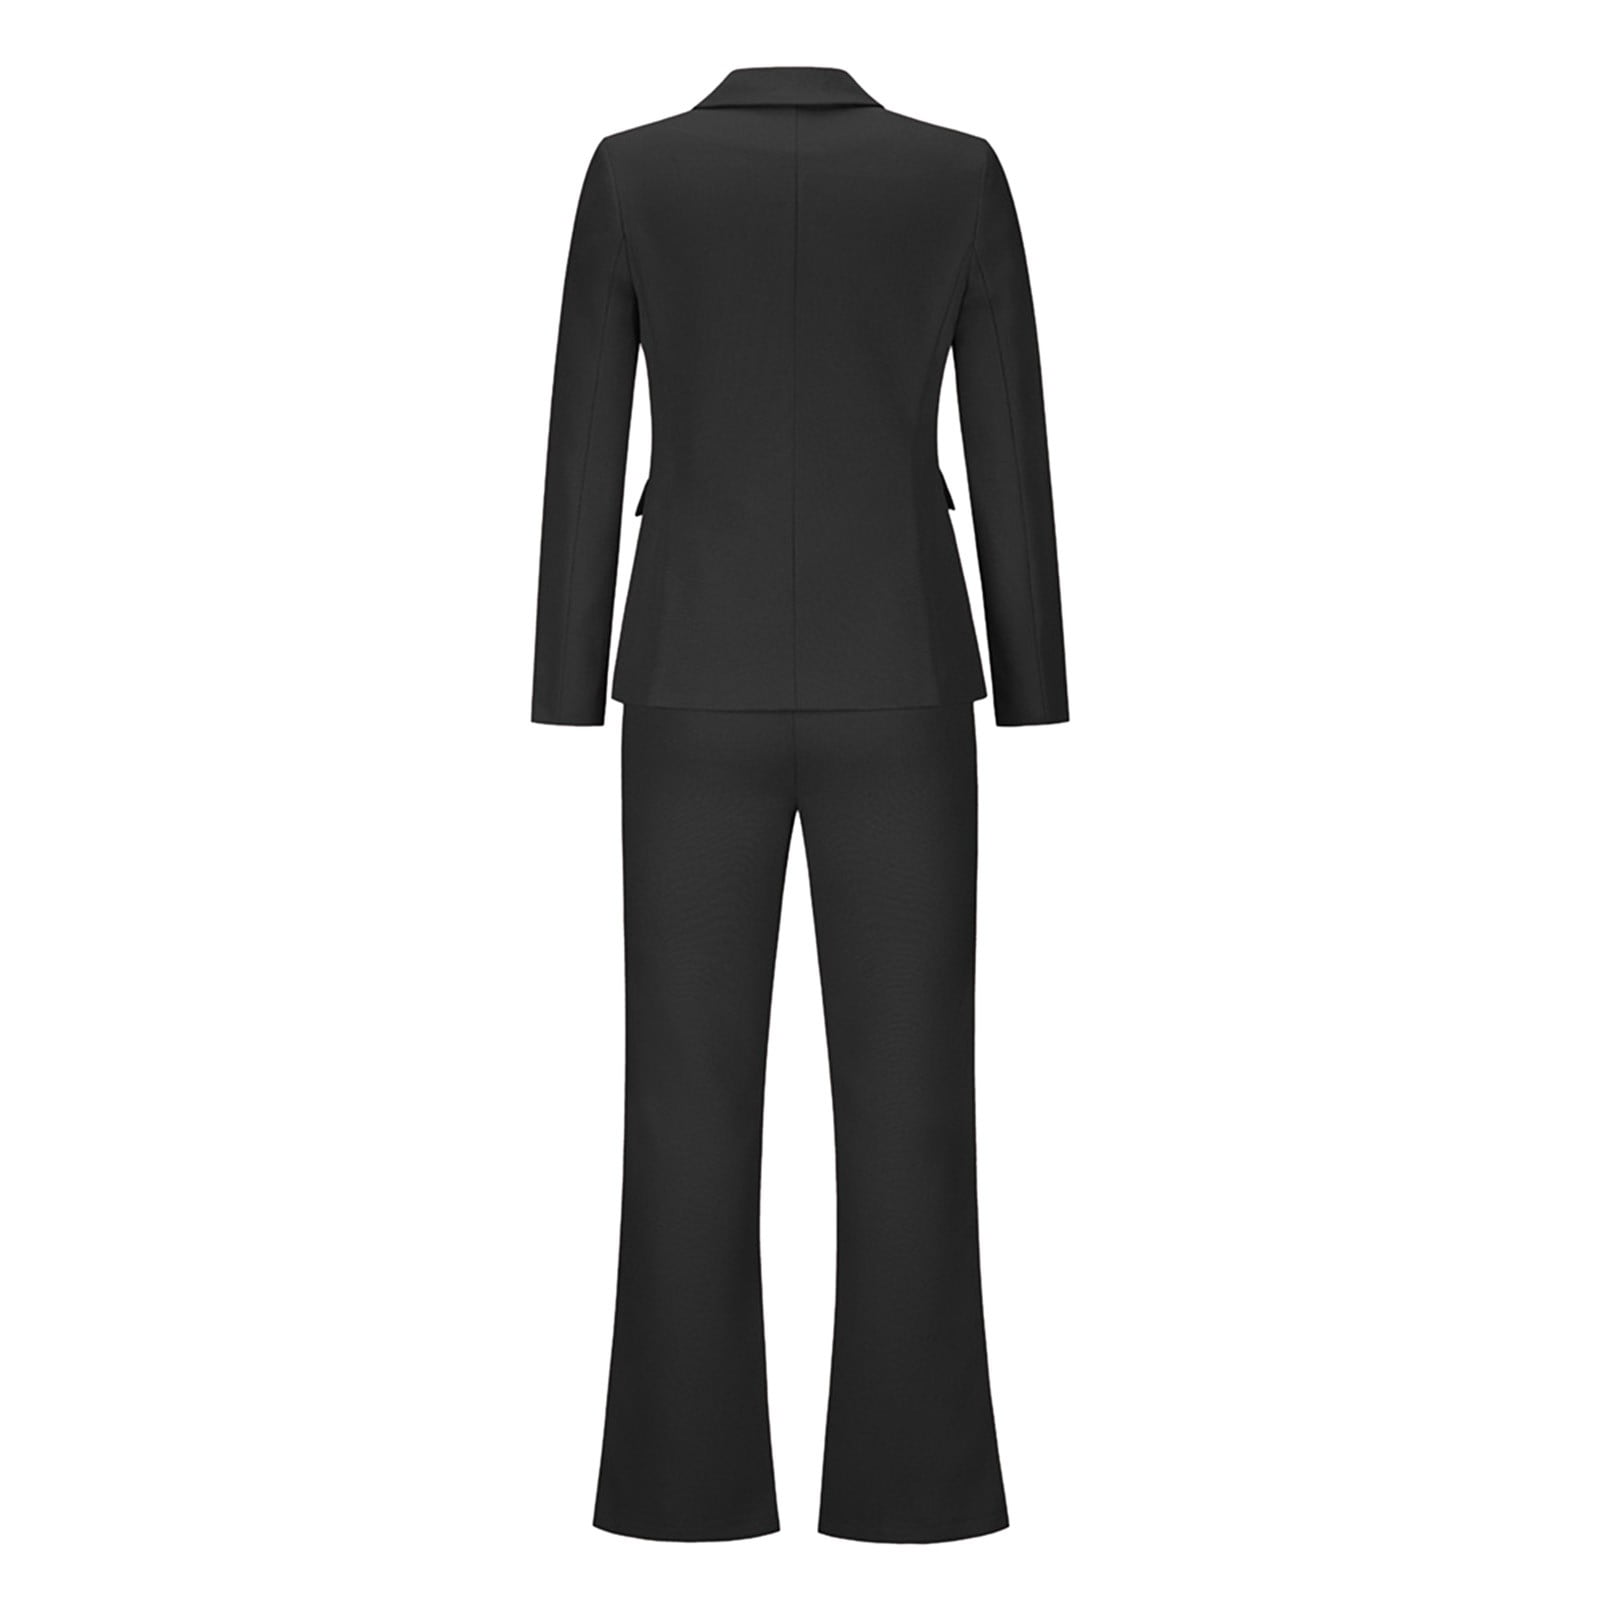 Aggregate more than 217 ladies black pant suit best